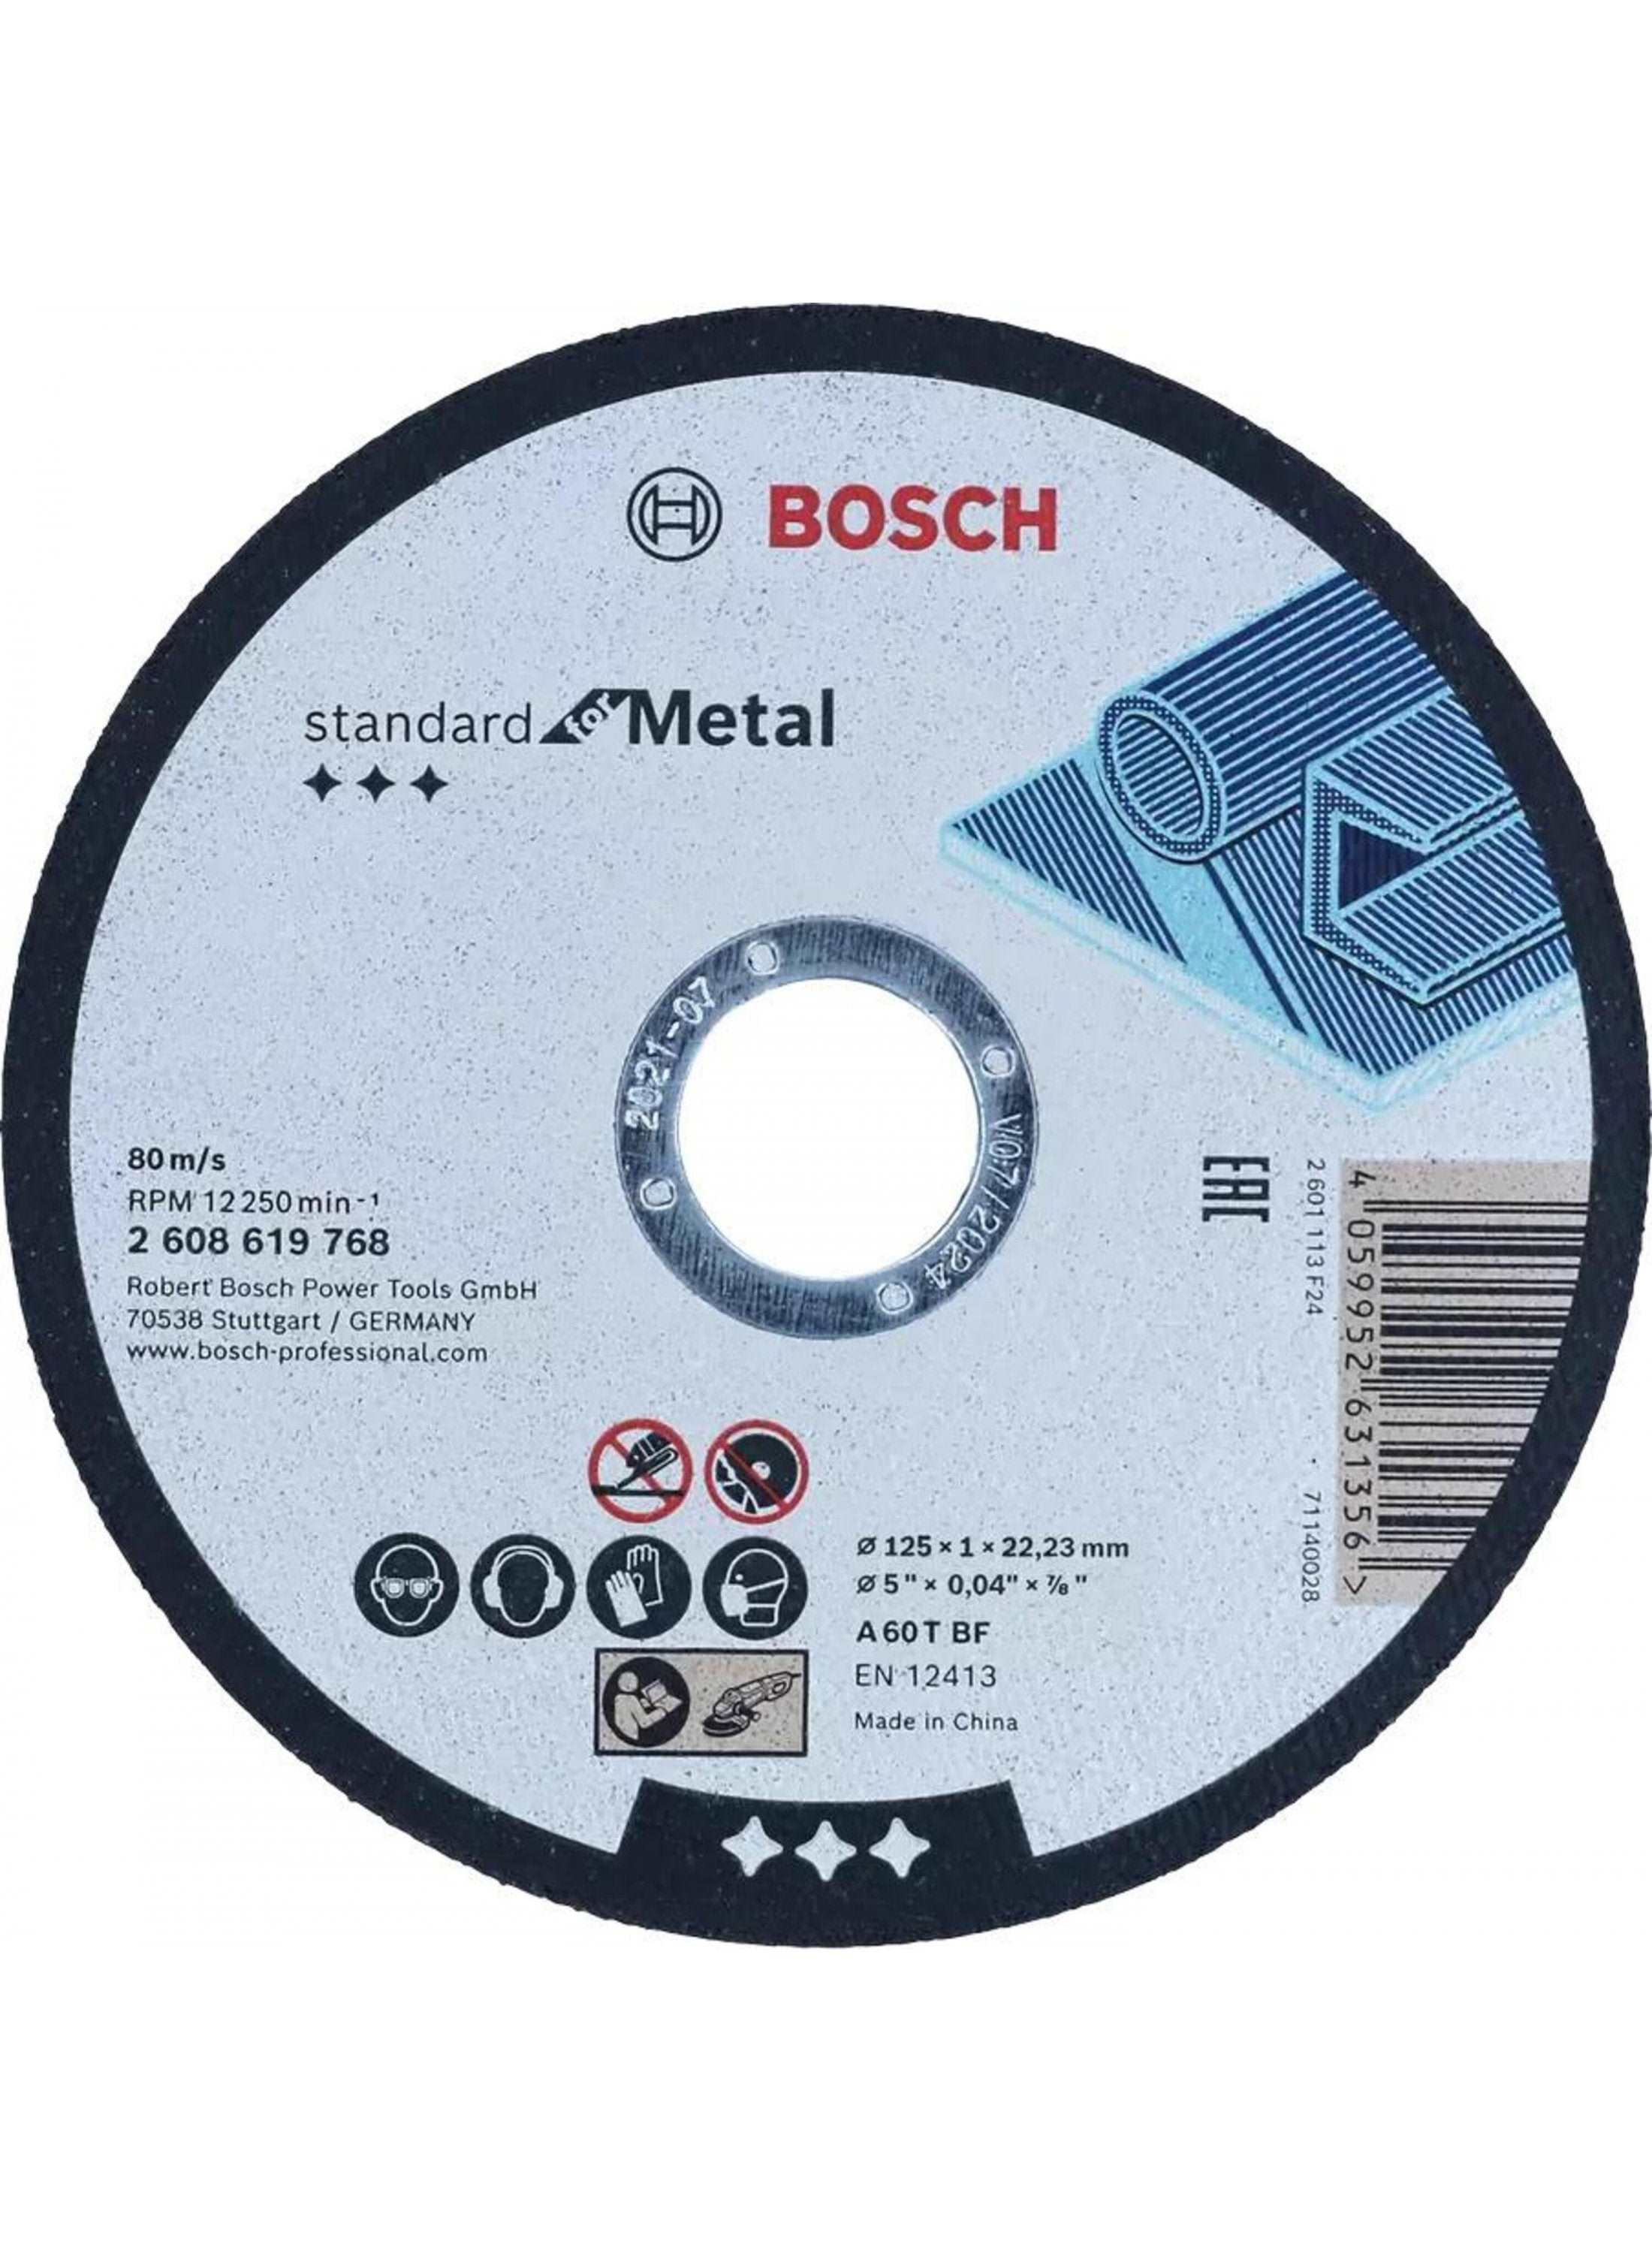 Bosch Cutting Disc 115mm x 1mm 2608619768 Power Tool Services